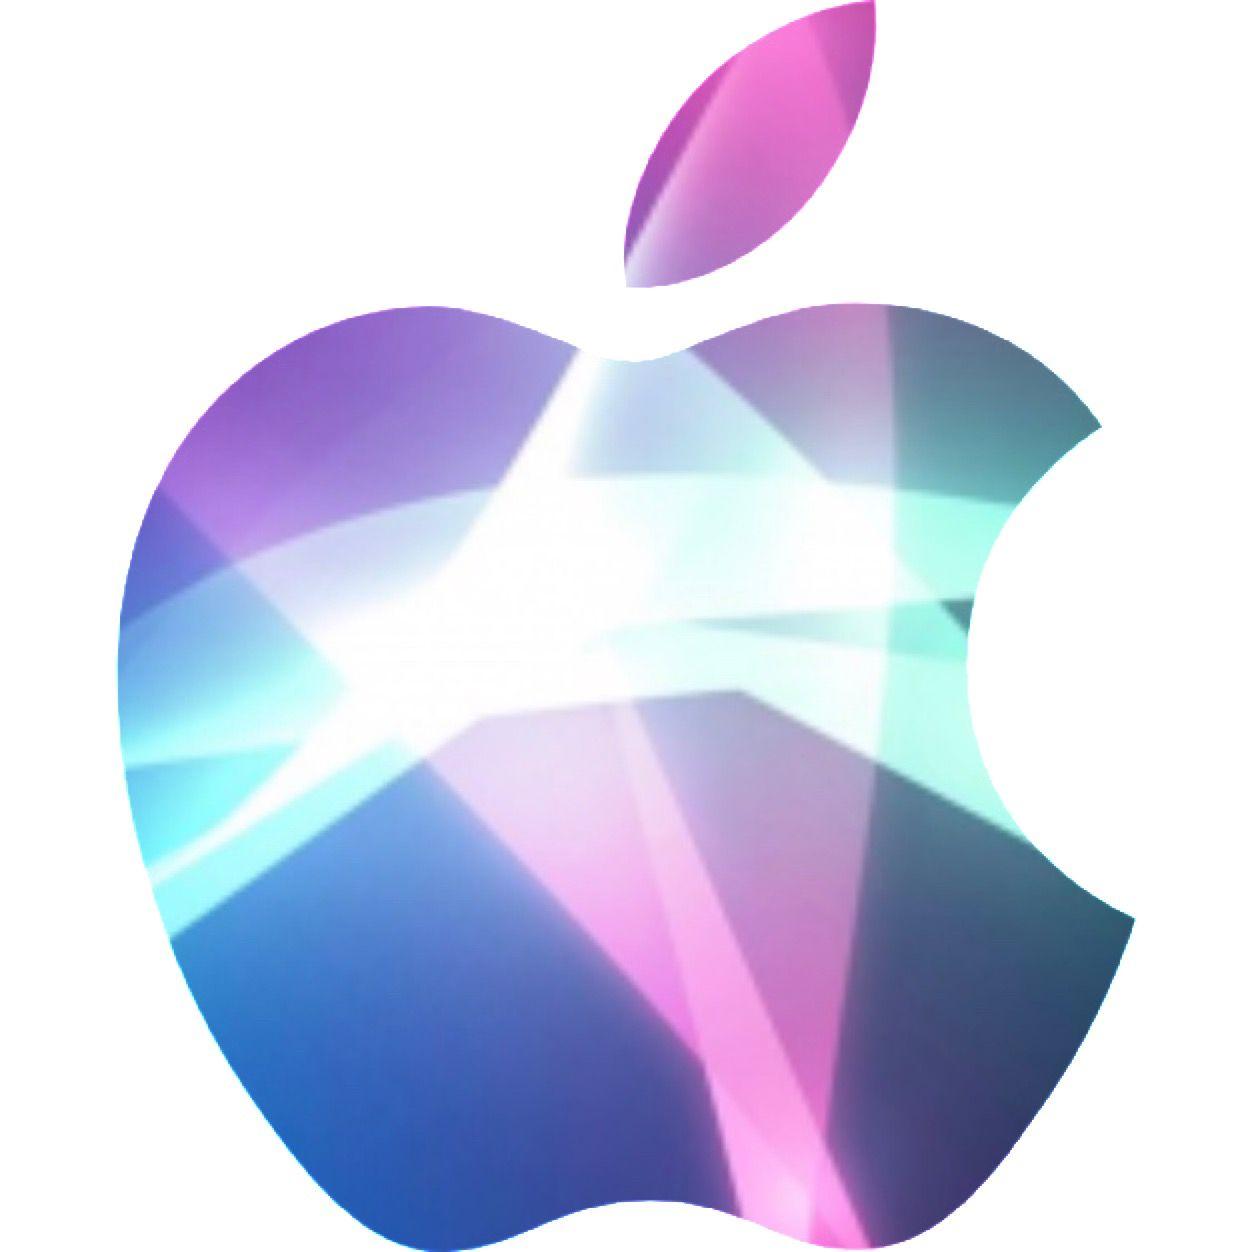 Siri Logo - iPhone 8 Event announced for September 12 at Steve Jobs Theatre : apple